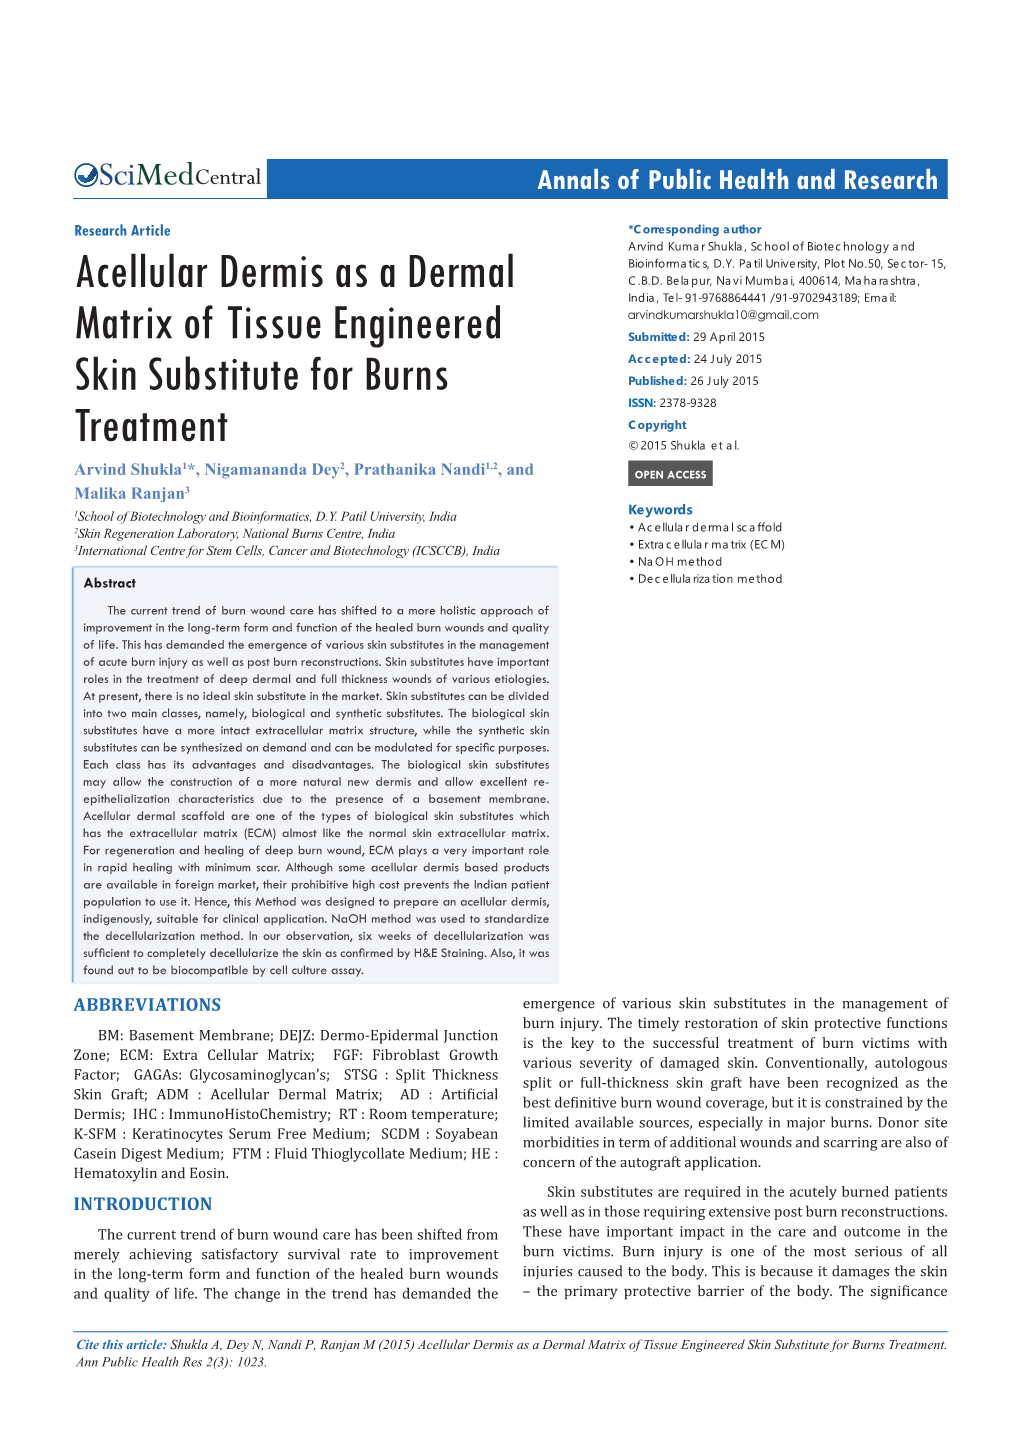 Acellular Dermis As a Dermal Matrix of Tissue Engineered Skin Substitute for Burns Treatment